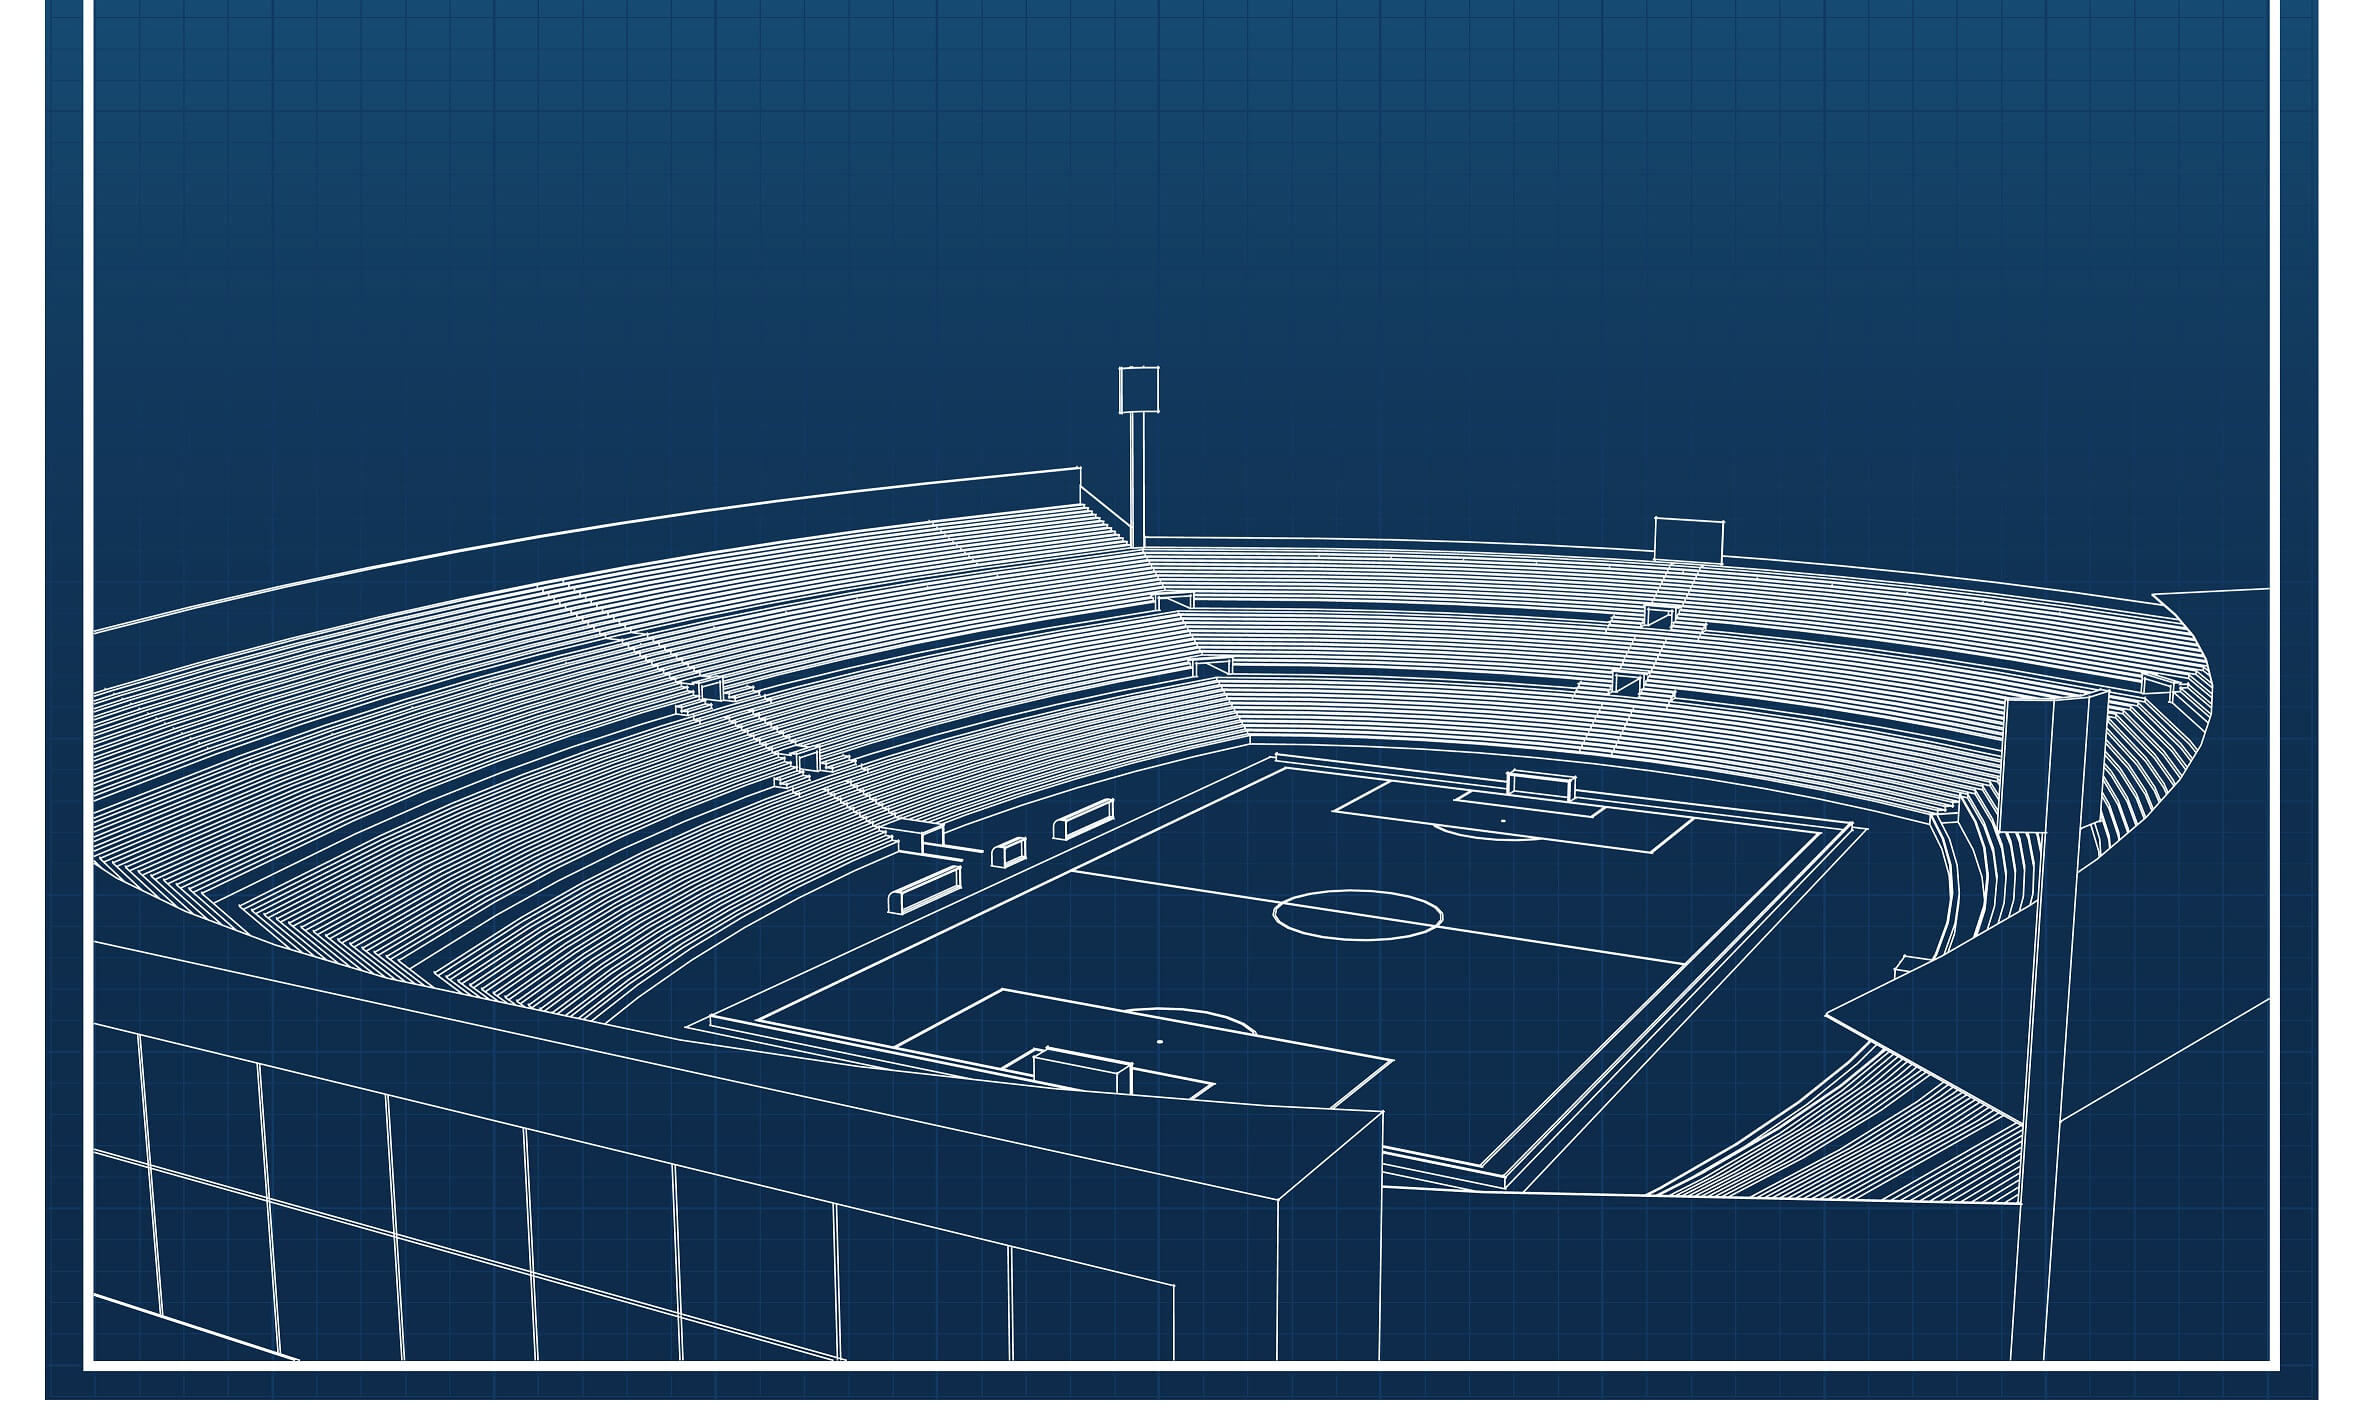 3D model of a soccer stadium